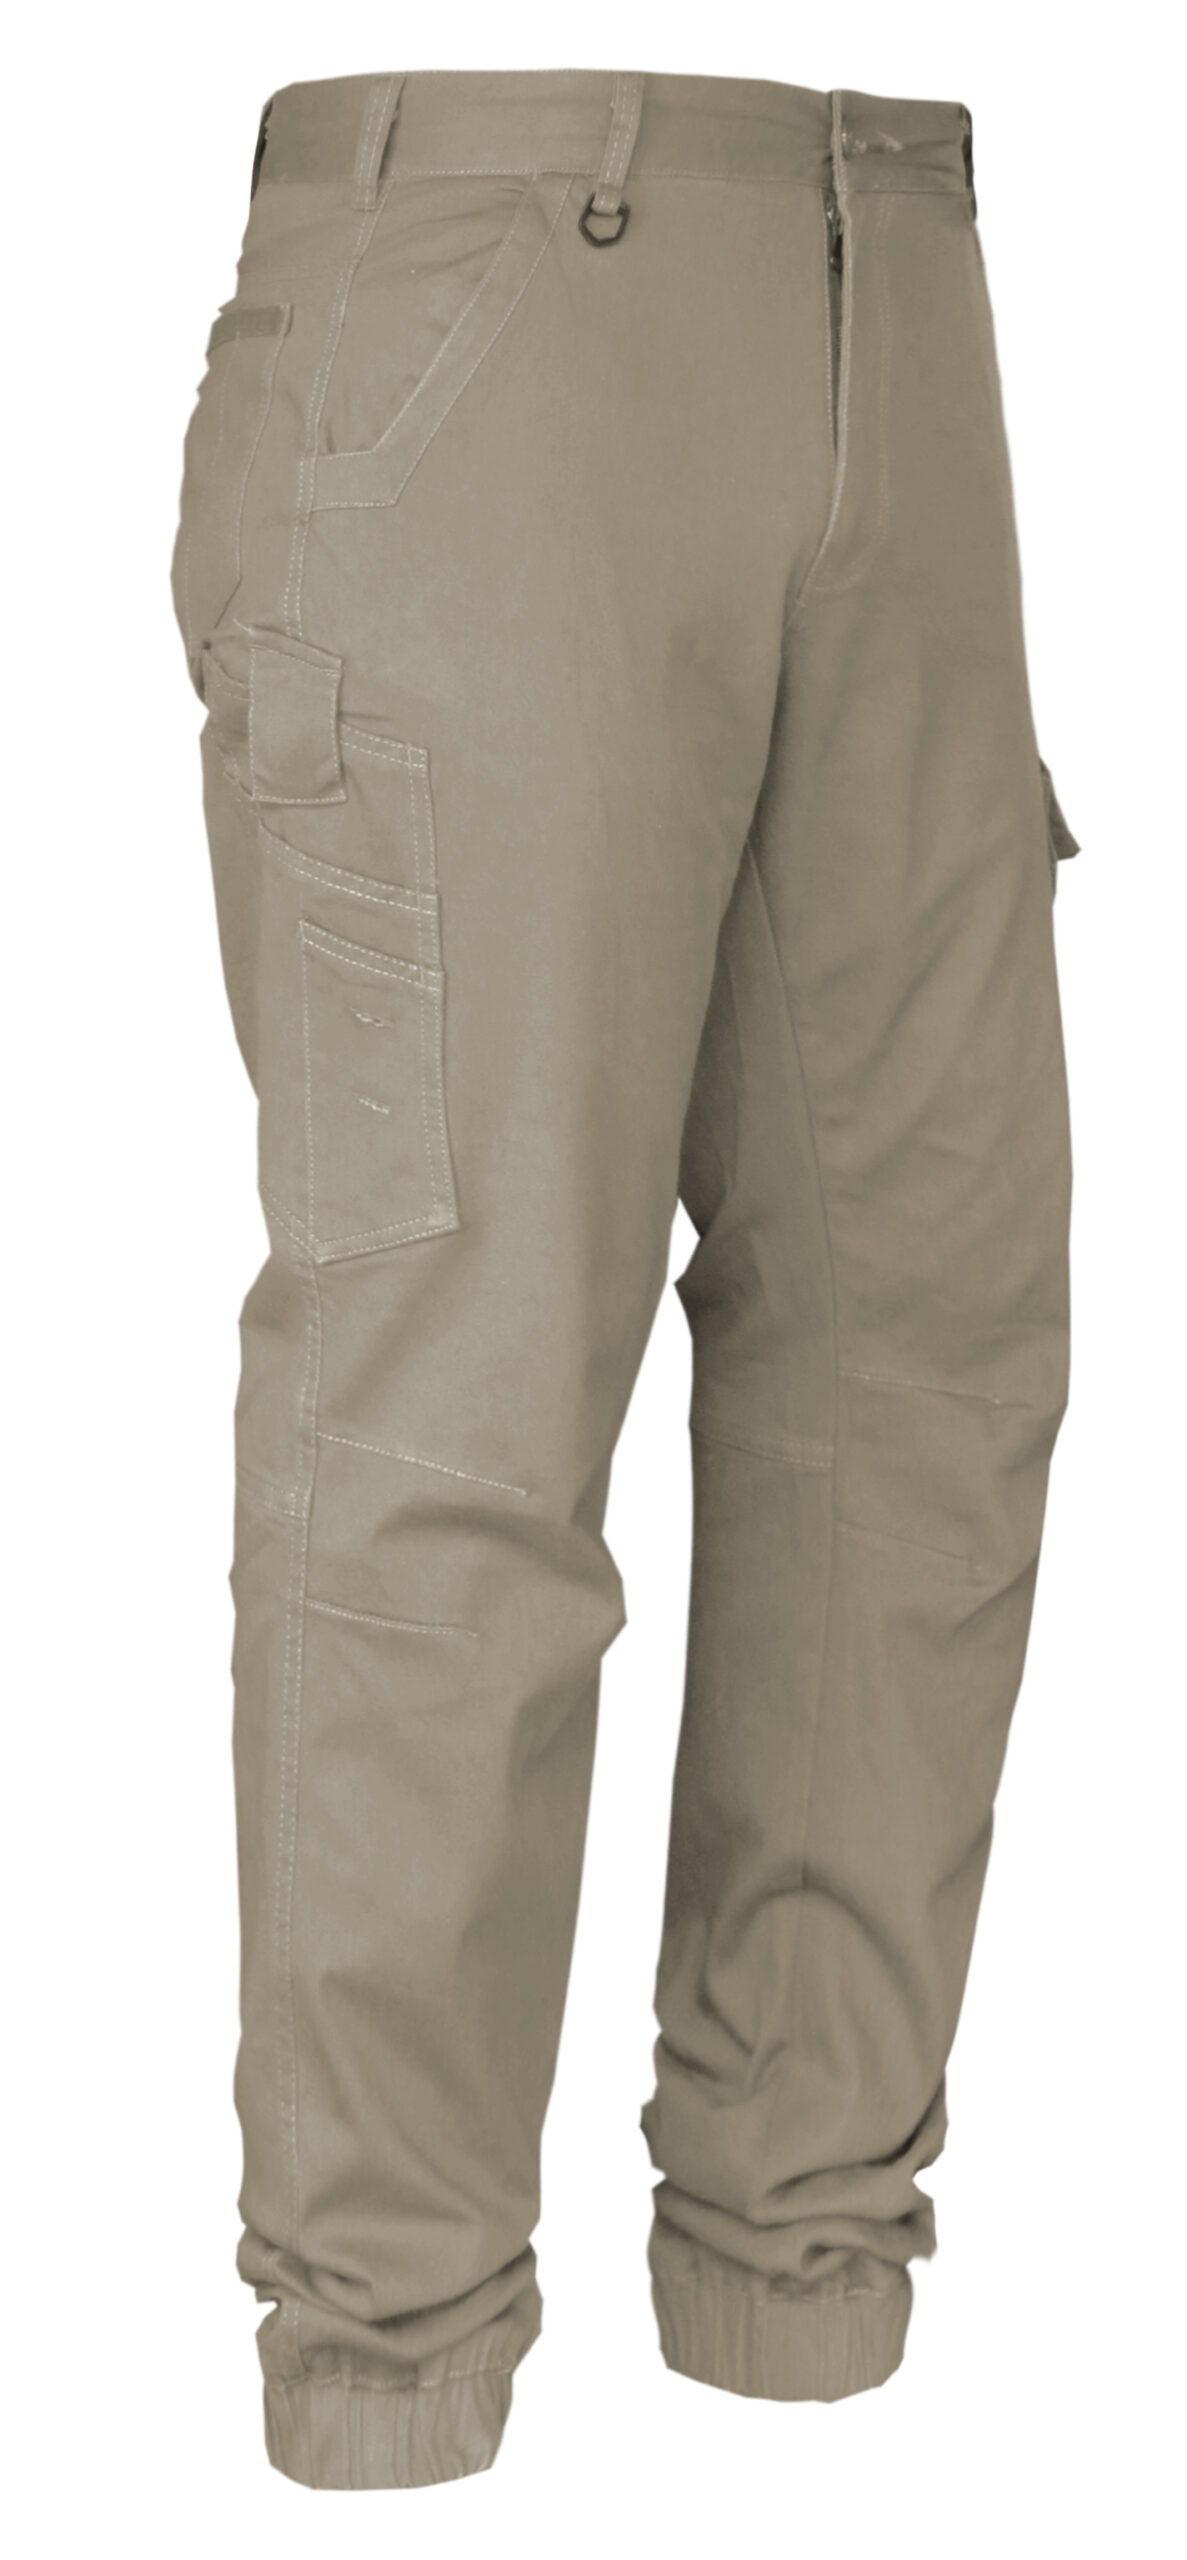 Work Cargo Pants Slim Fit Elastic Ankle Cuff - goodgearnation